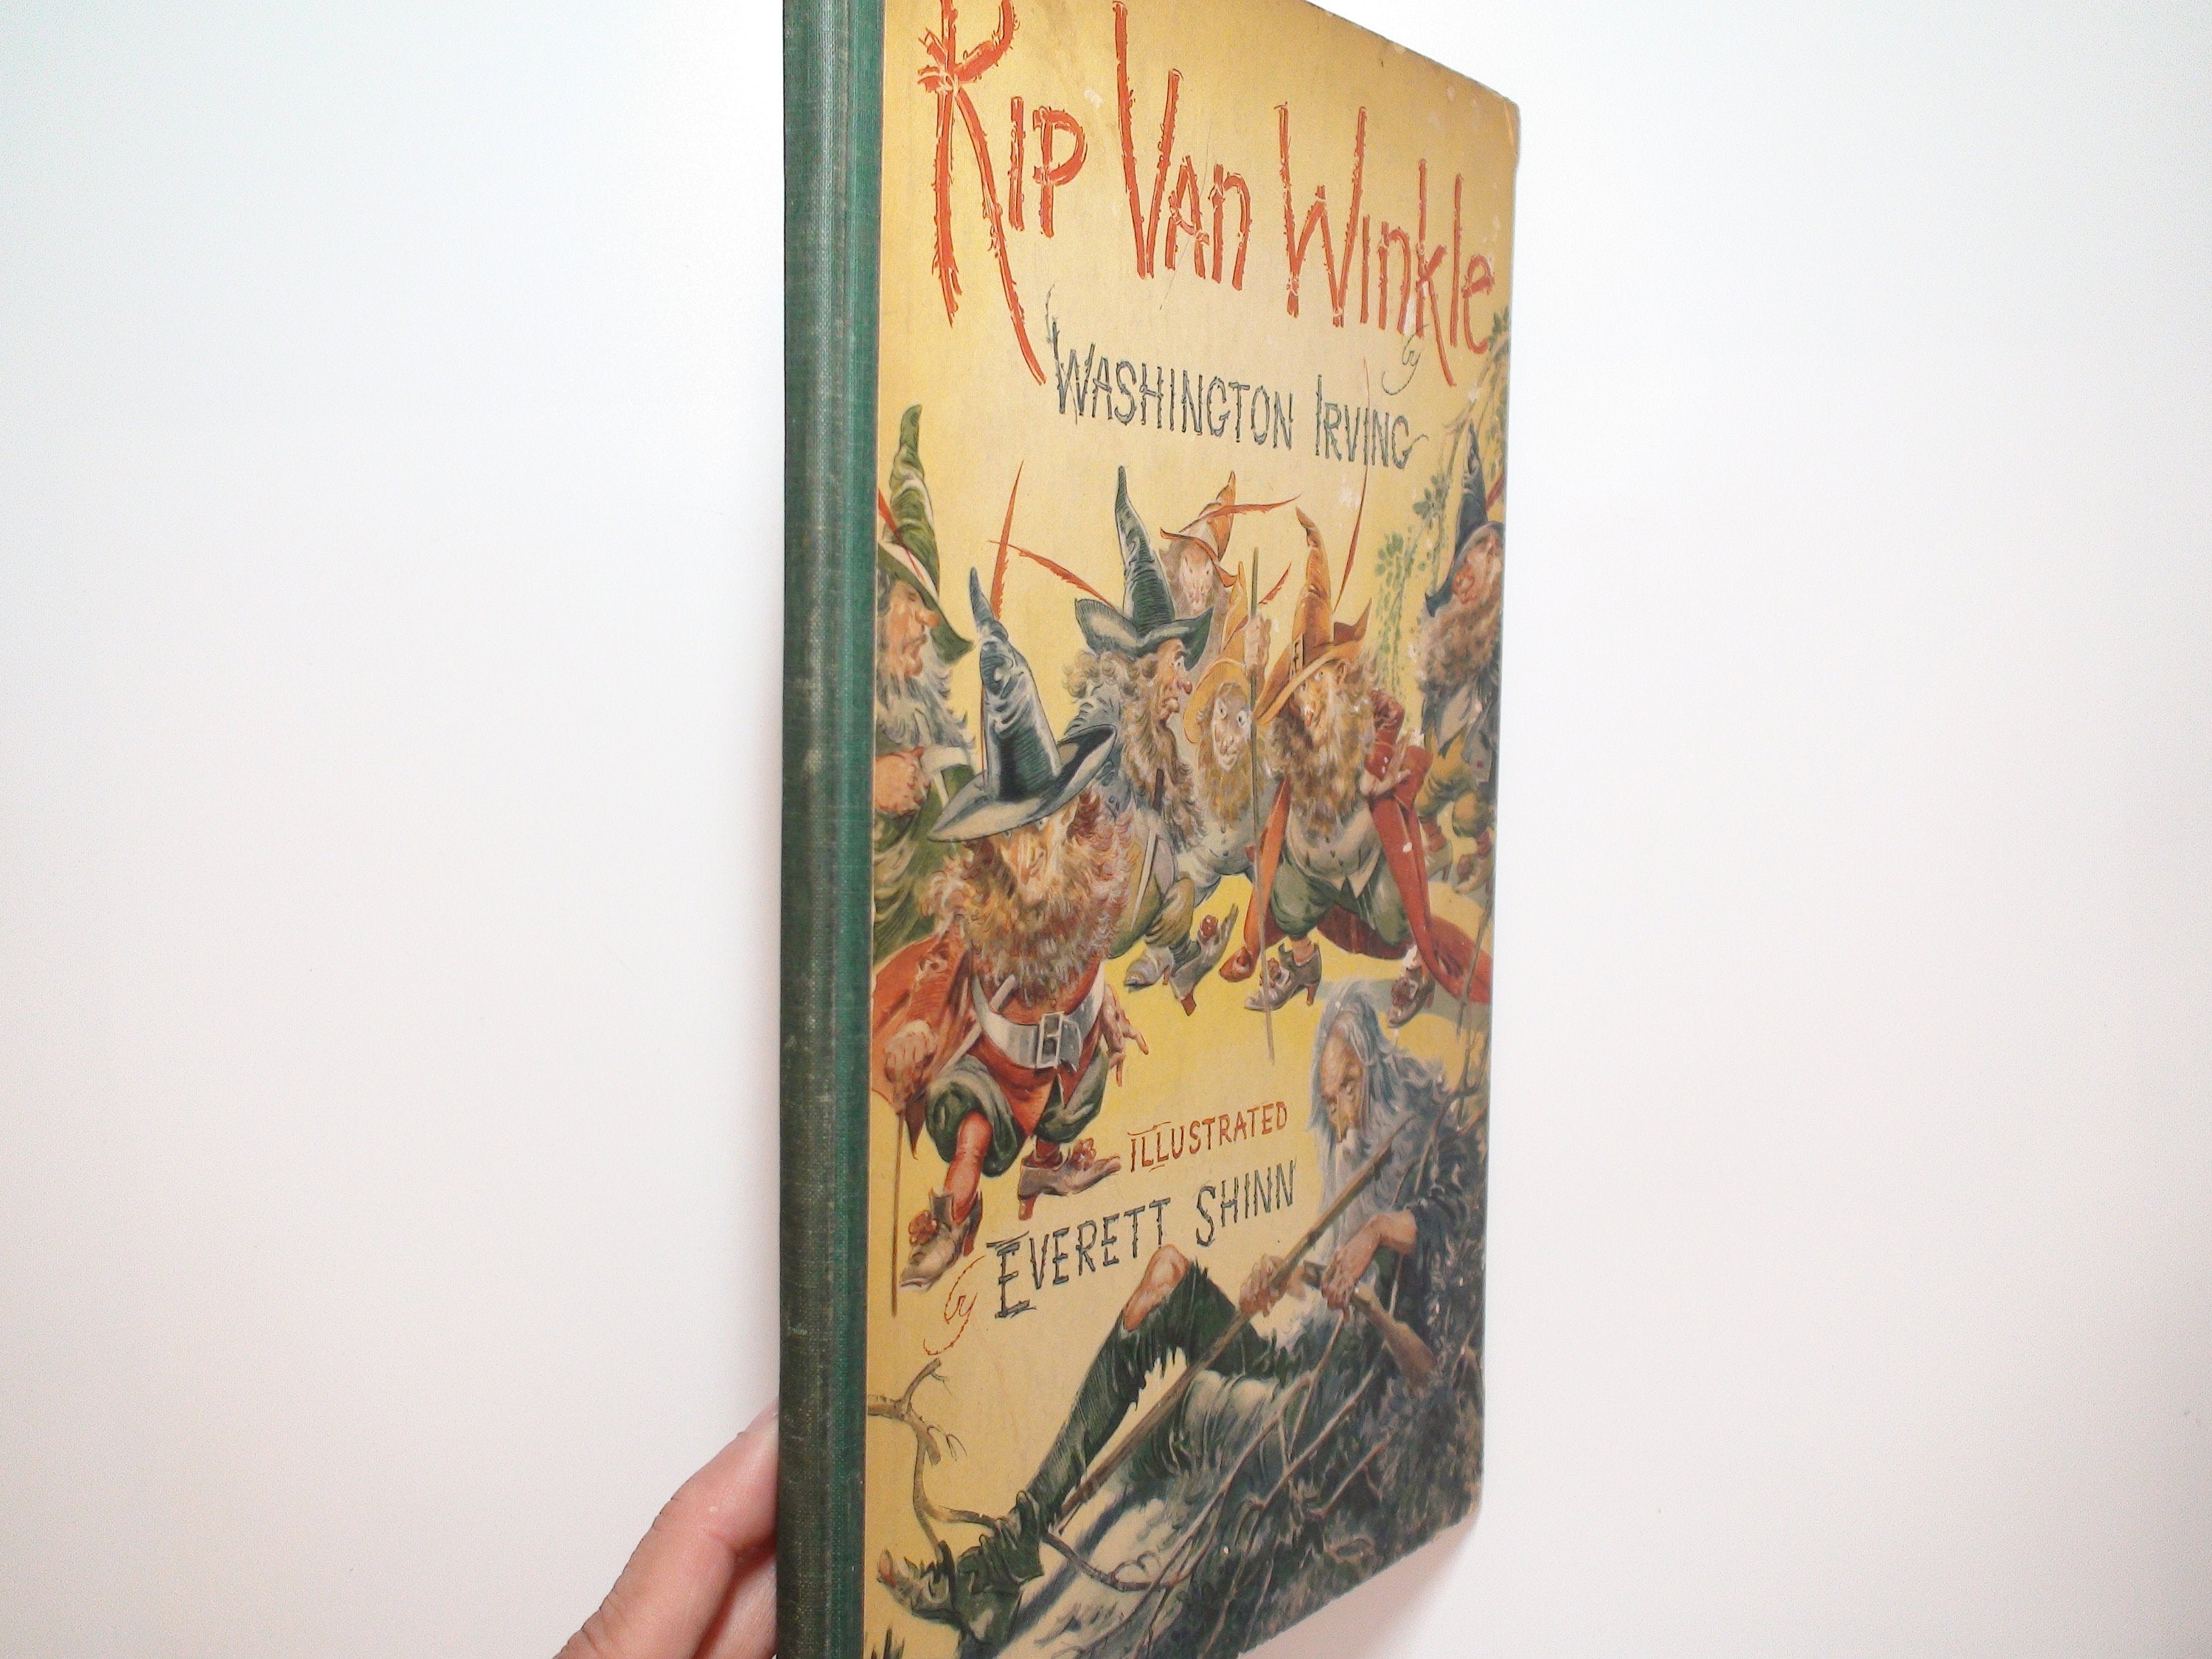 Rip Van Winkle by Washington Irving, Illustrated by Everett Shinn, 1939